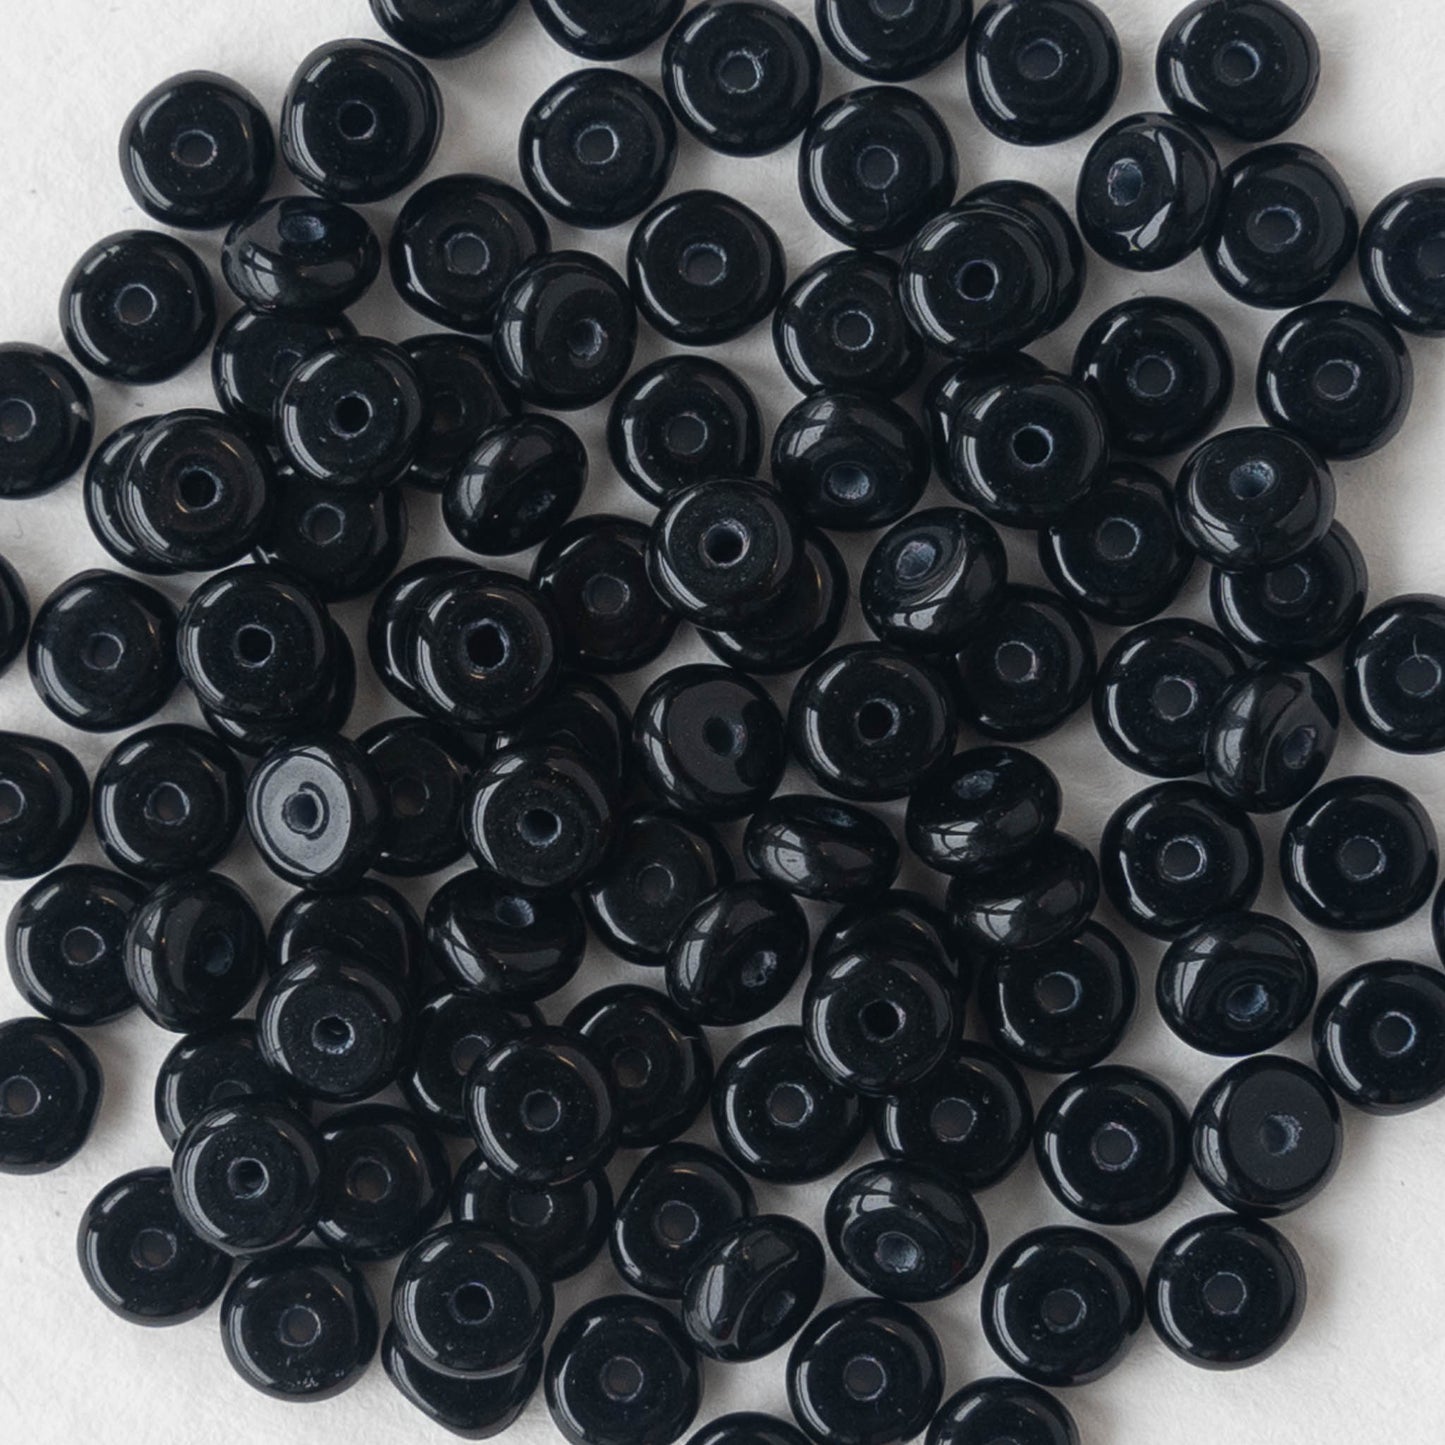 4mm Rondelle Beads - Black - 100 Beads